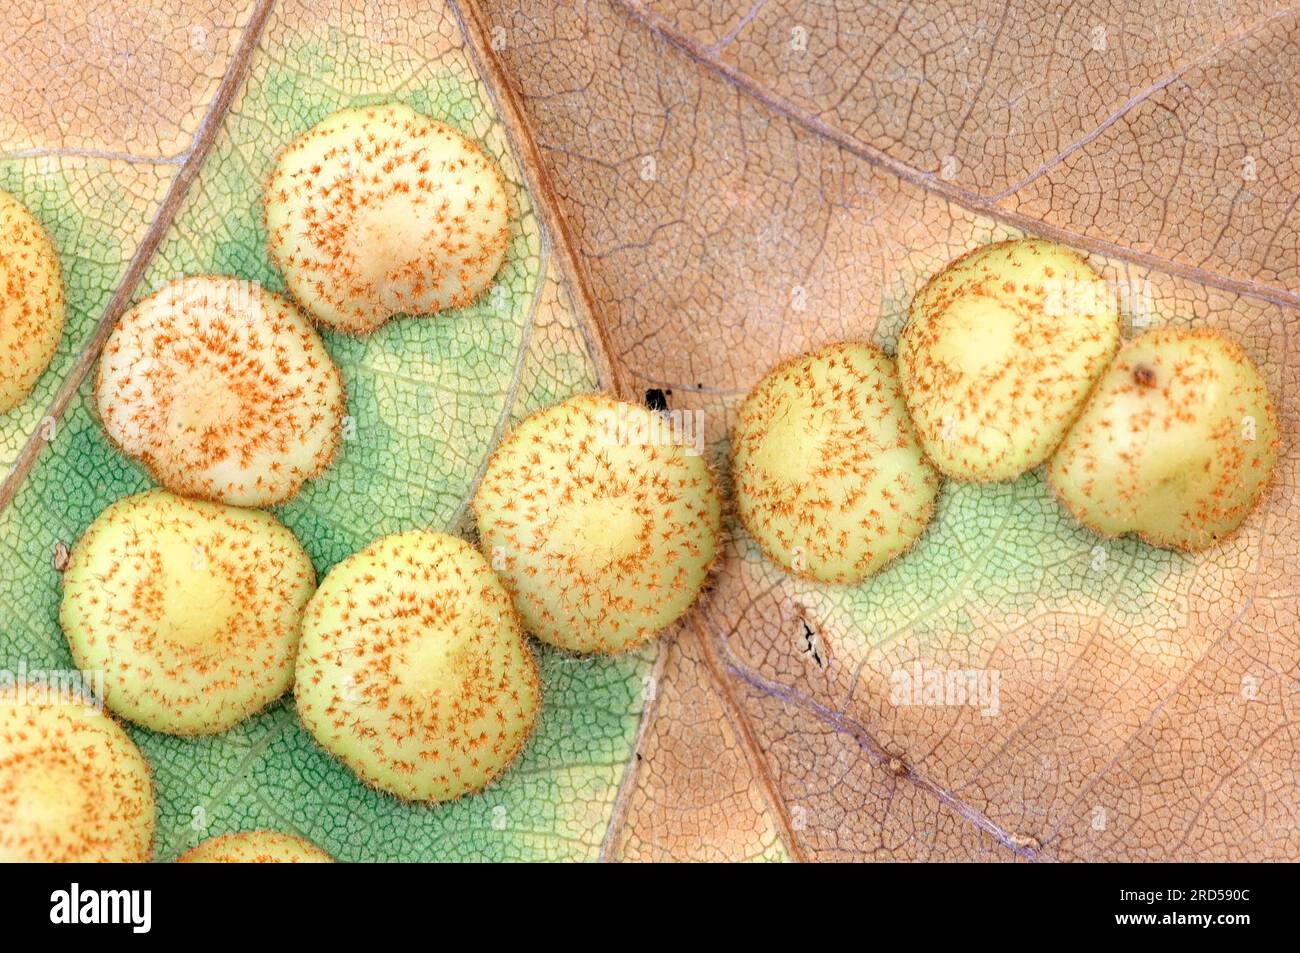 Galls of the oak lentil gall wasp on oak leaf, North Rhine-Westphalia (Neuroterus quercusbaccarum), lentil gall, Germany Stock Photo